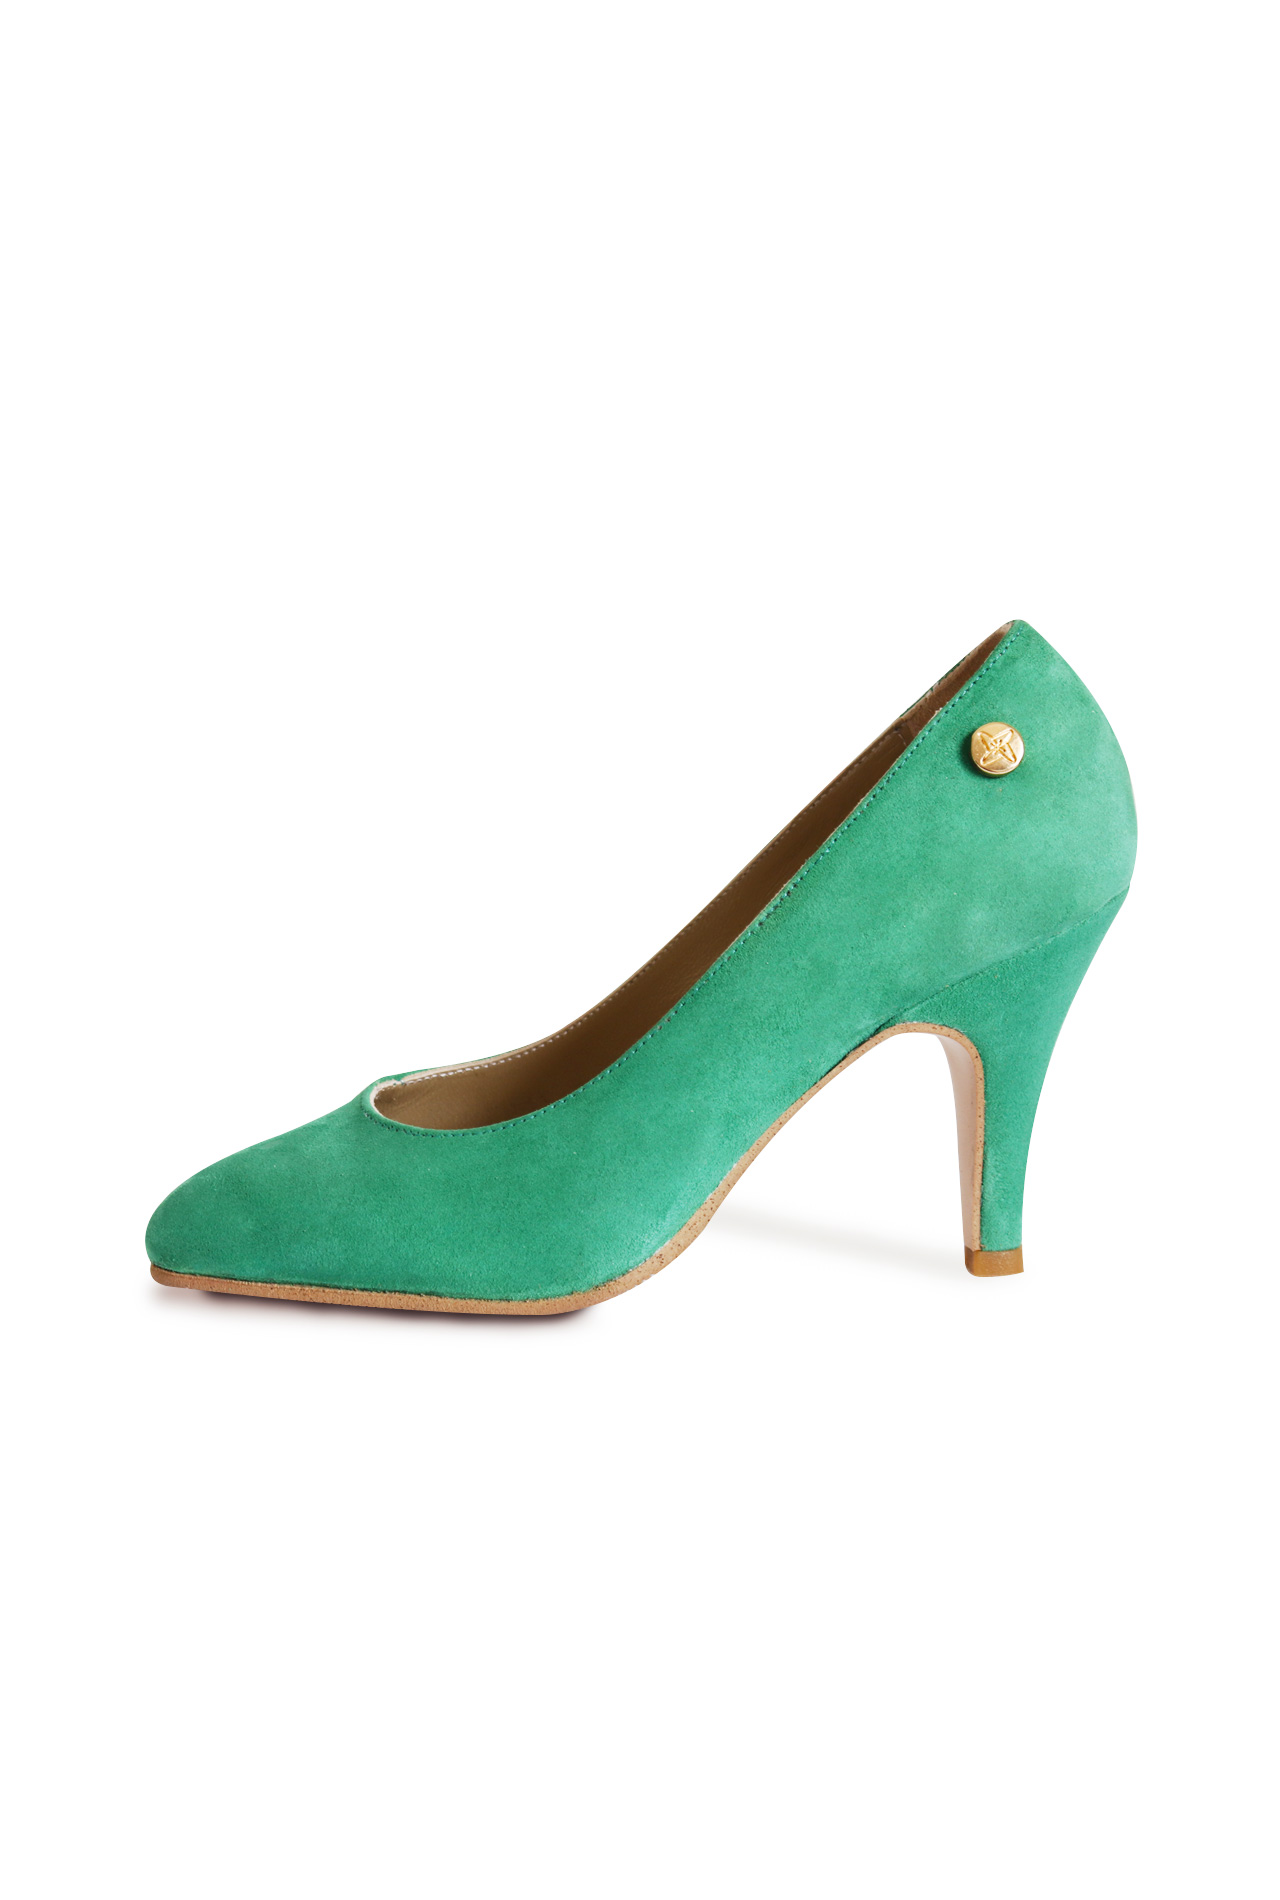 Emerald Green Suede Stilettos for Petites! Small Shoes by Cristina Correia